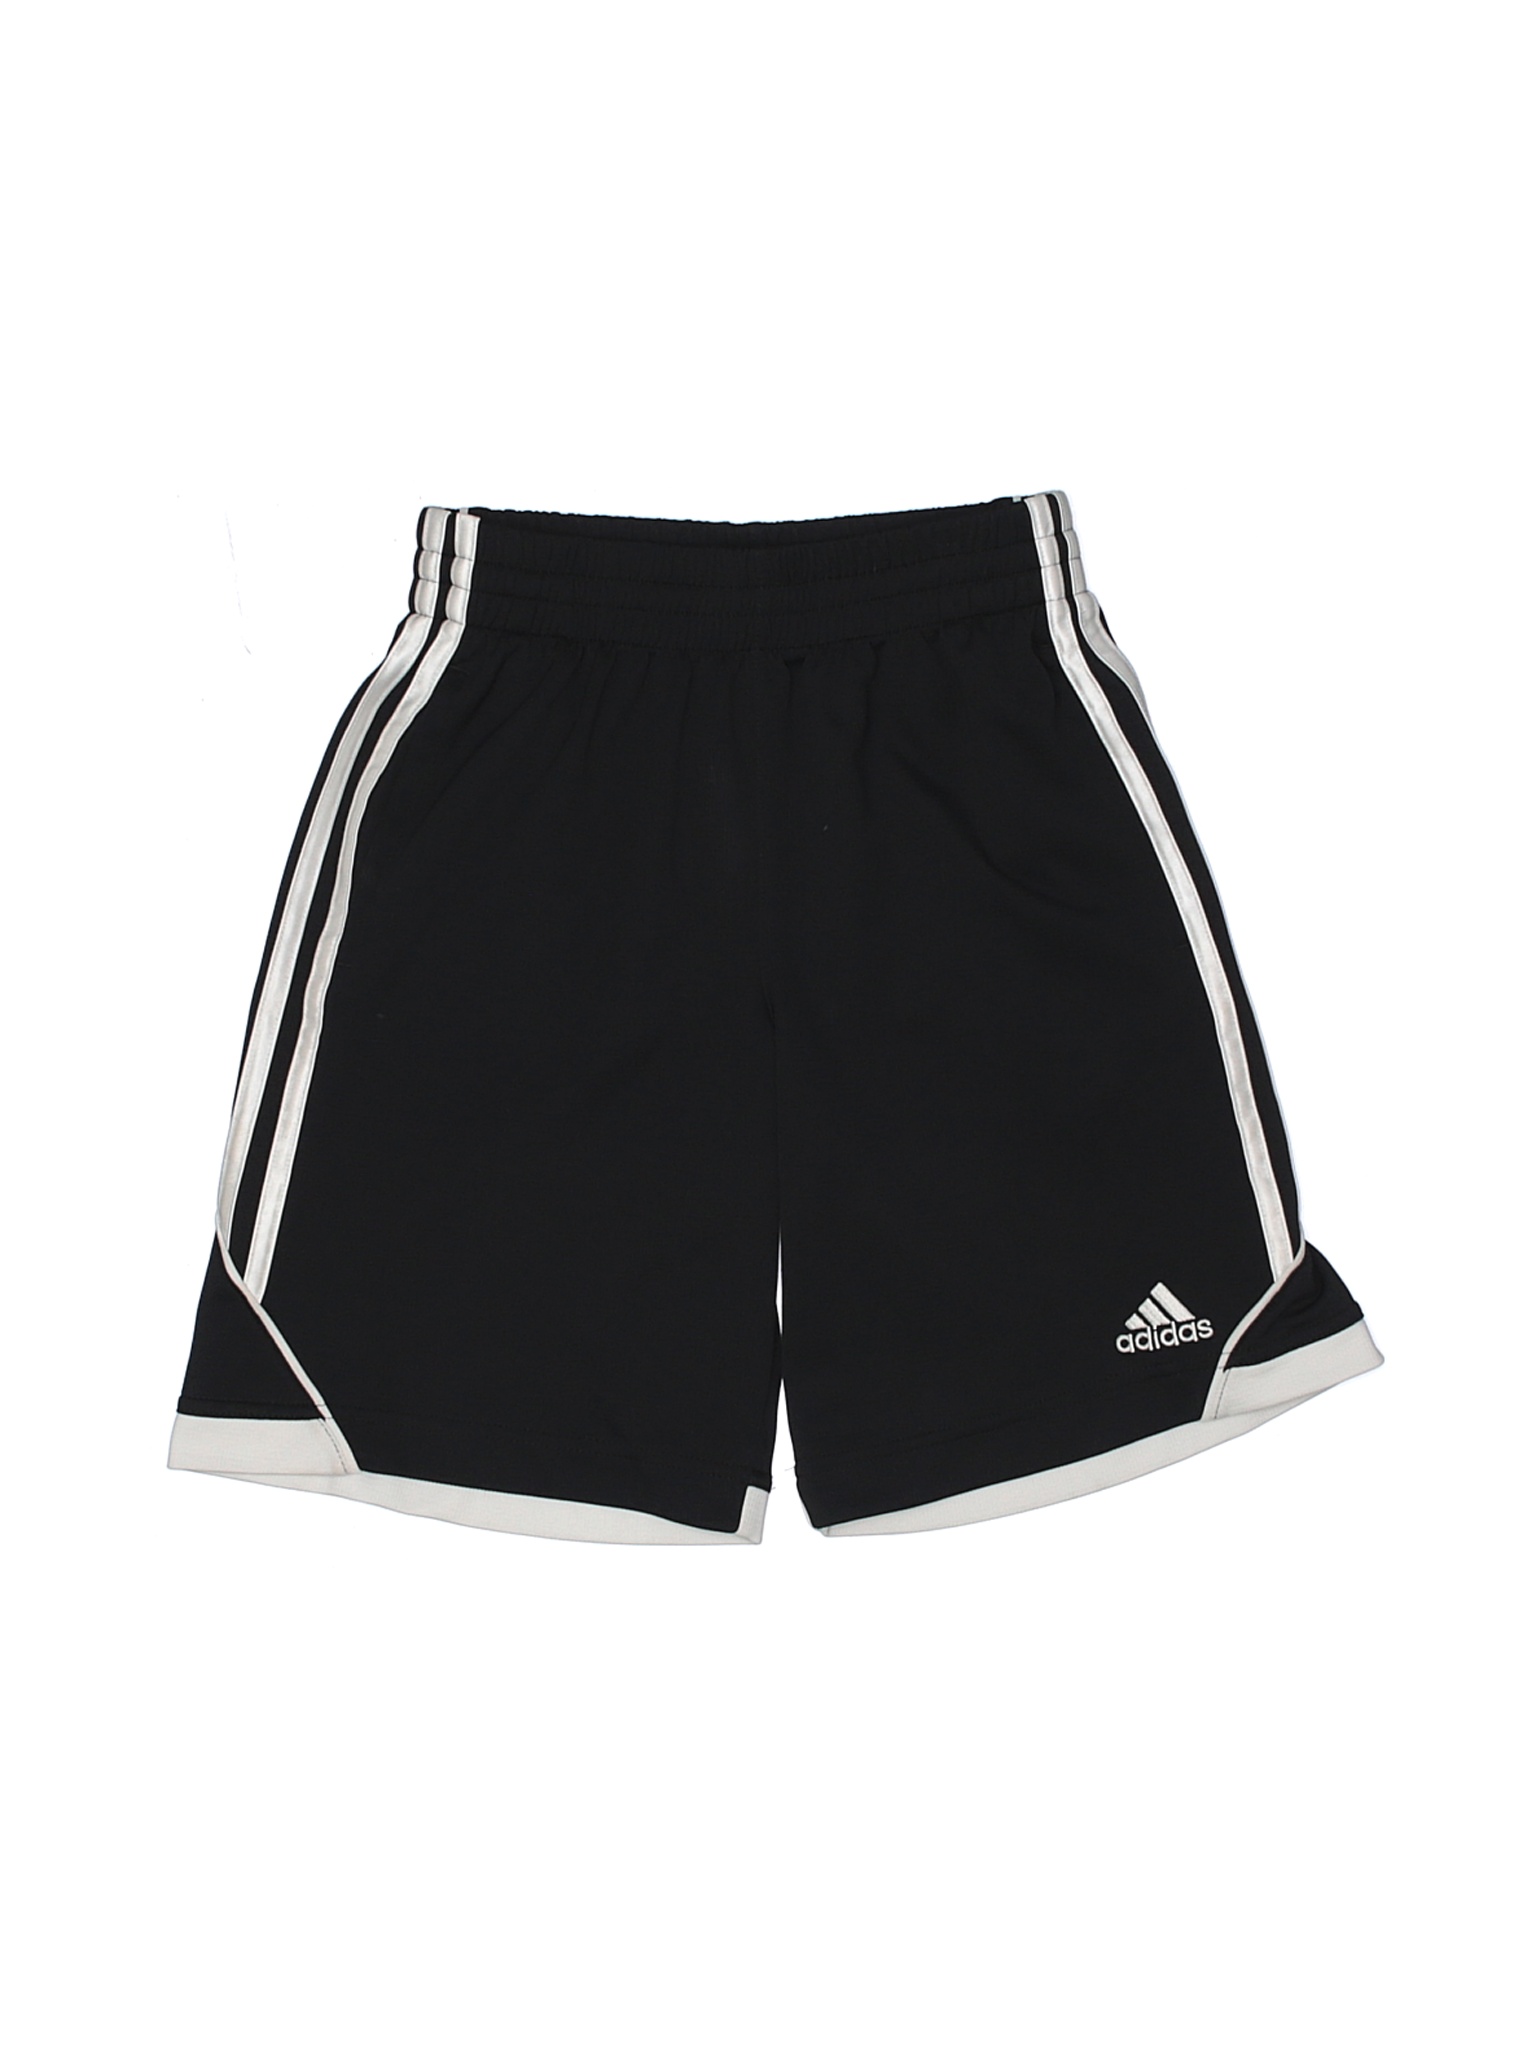 Adidas Boys Black Athletic Shorts 10 | eBay